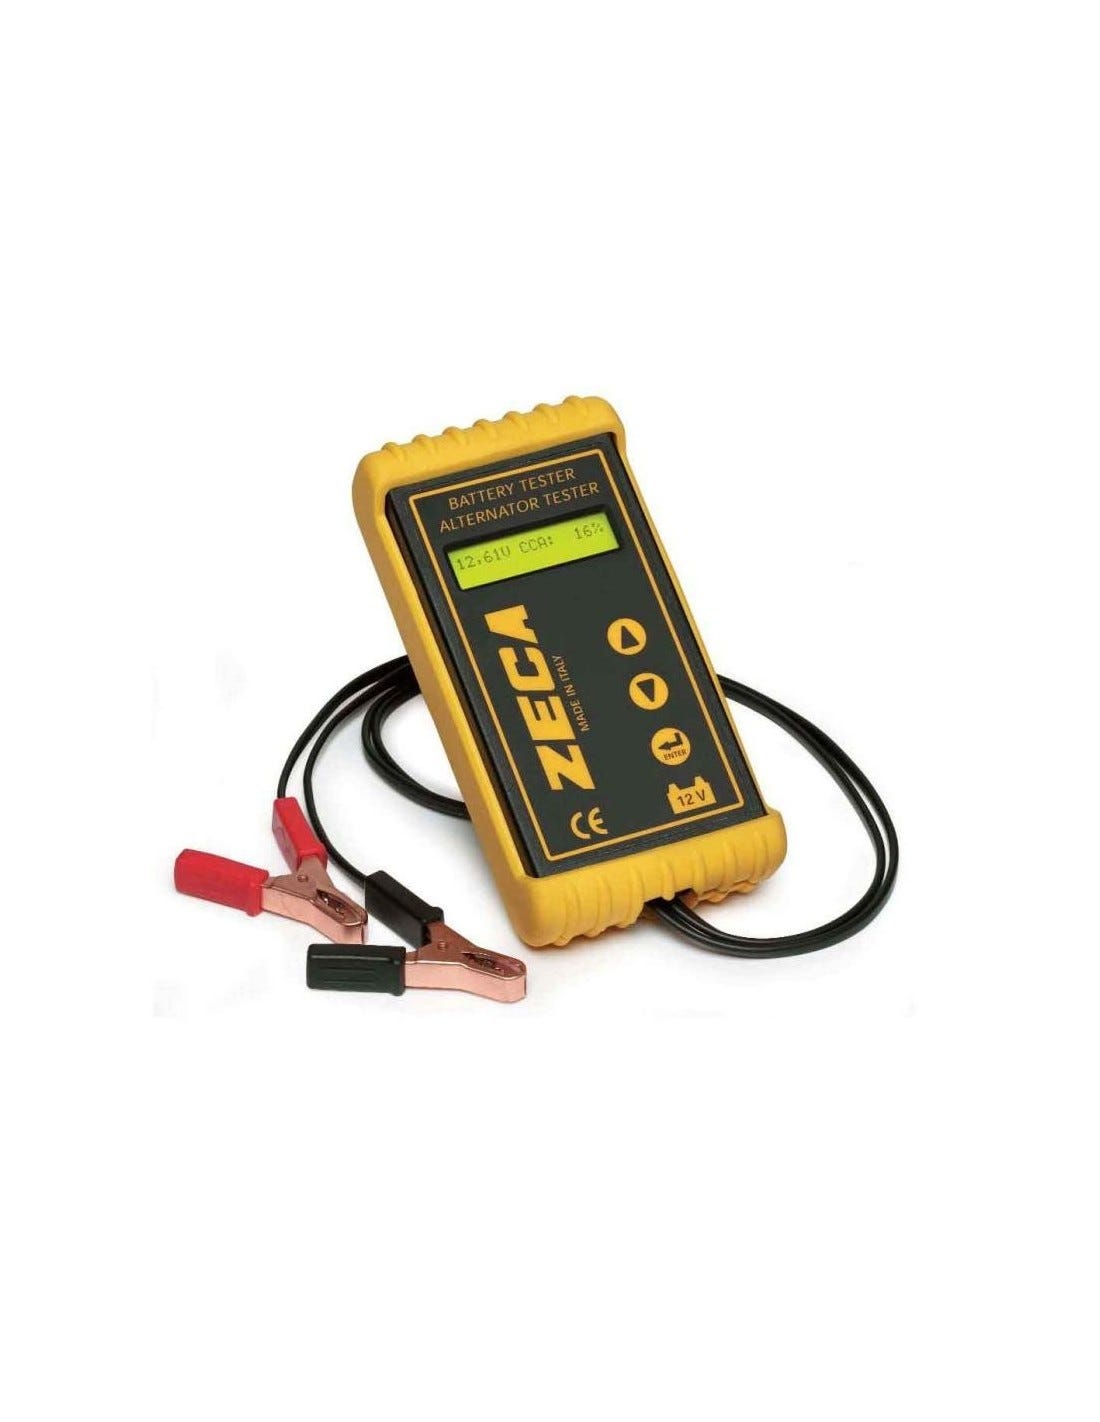 ZECA 210 - Tester per Batterie Avviamento e Alternatori (2 in 1